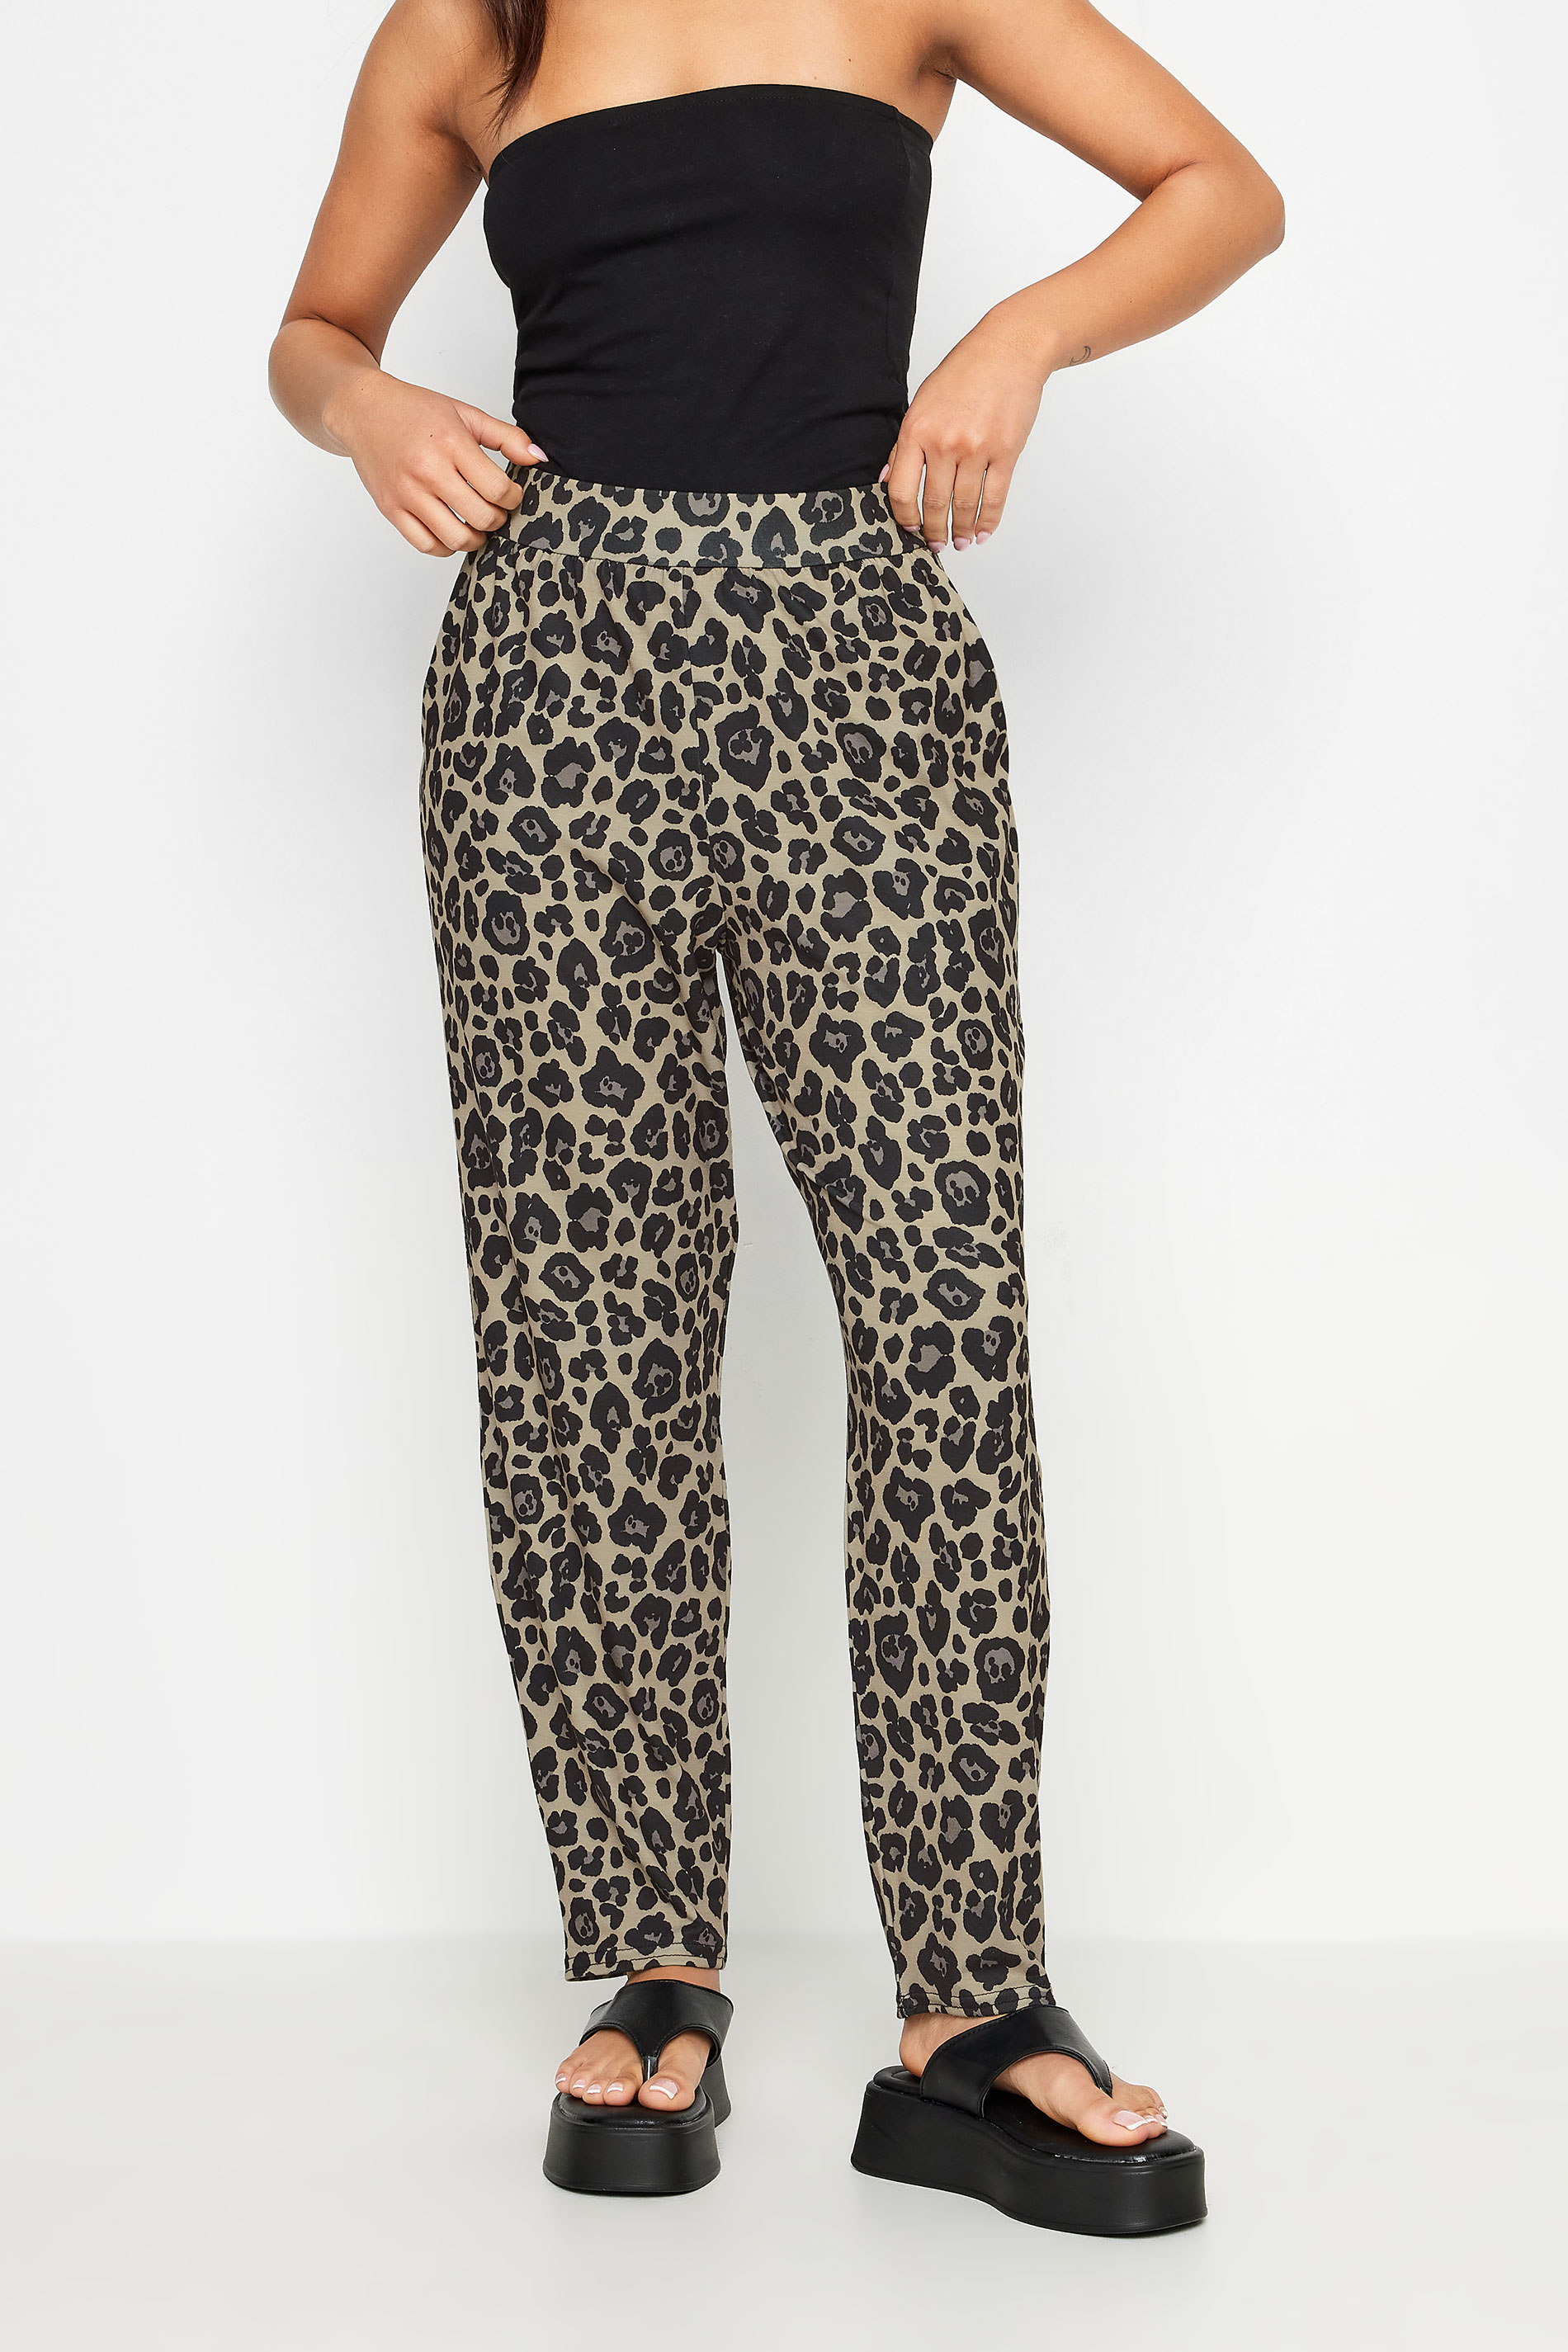 PixieGirl Petite Womens Brown Leopard Print Harem Trousers | PixieGirl 3